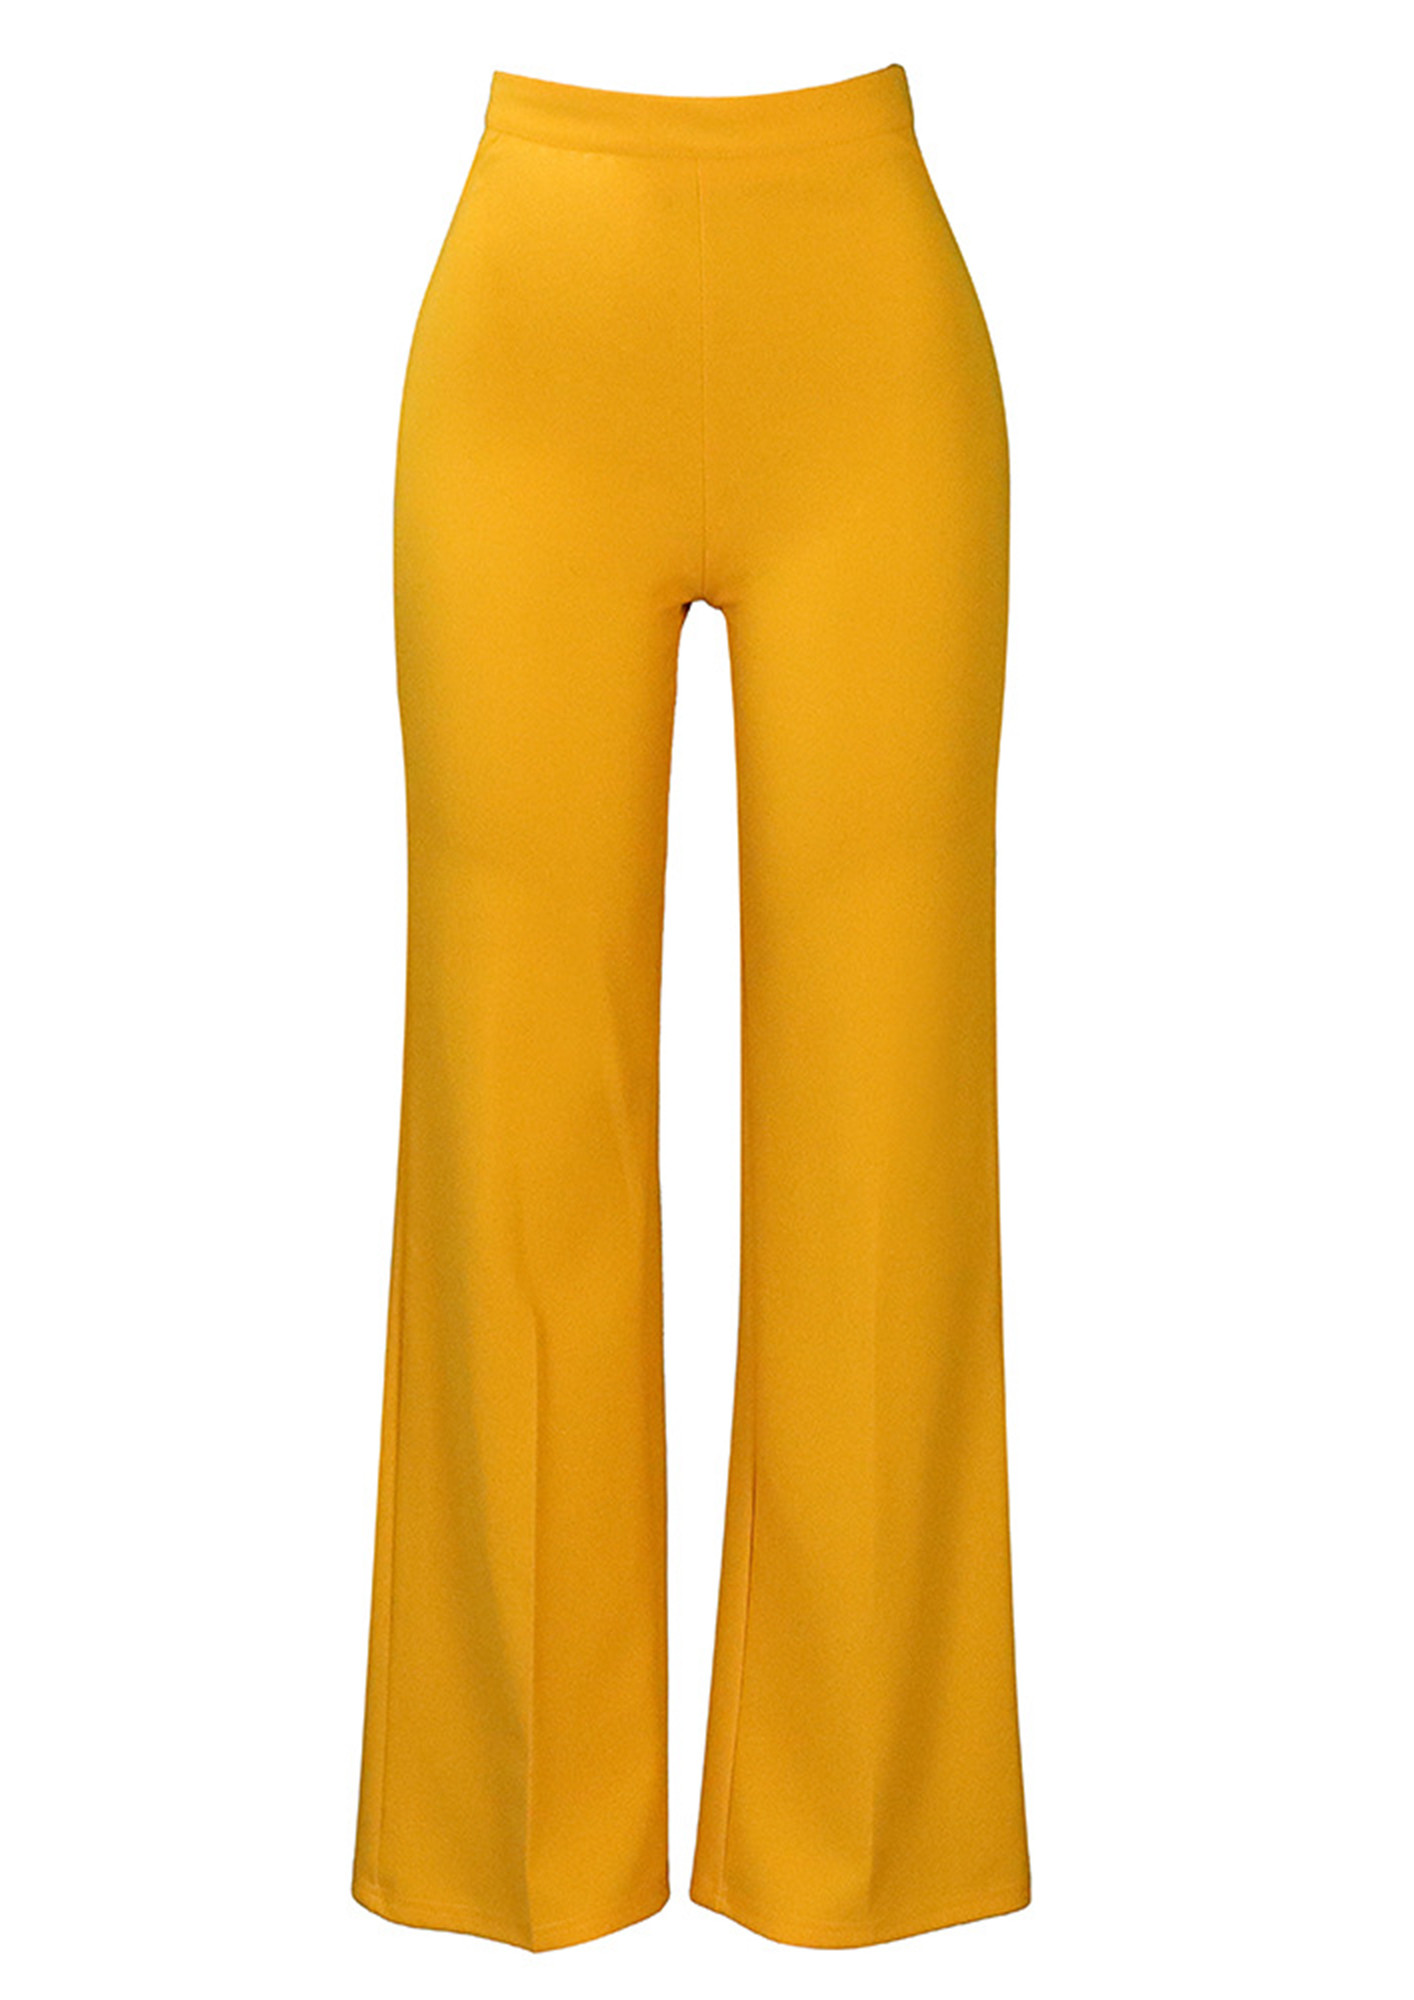 High waist wide leg pants, Mustard yellow trousers